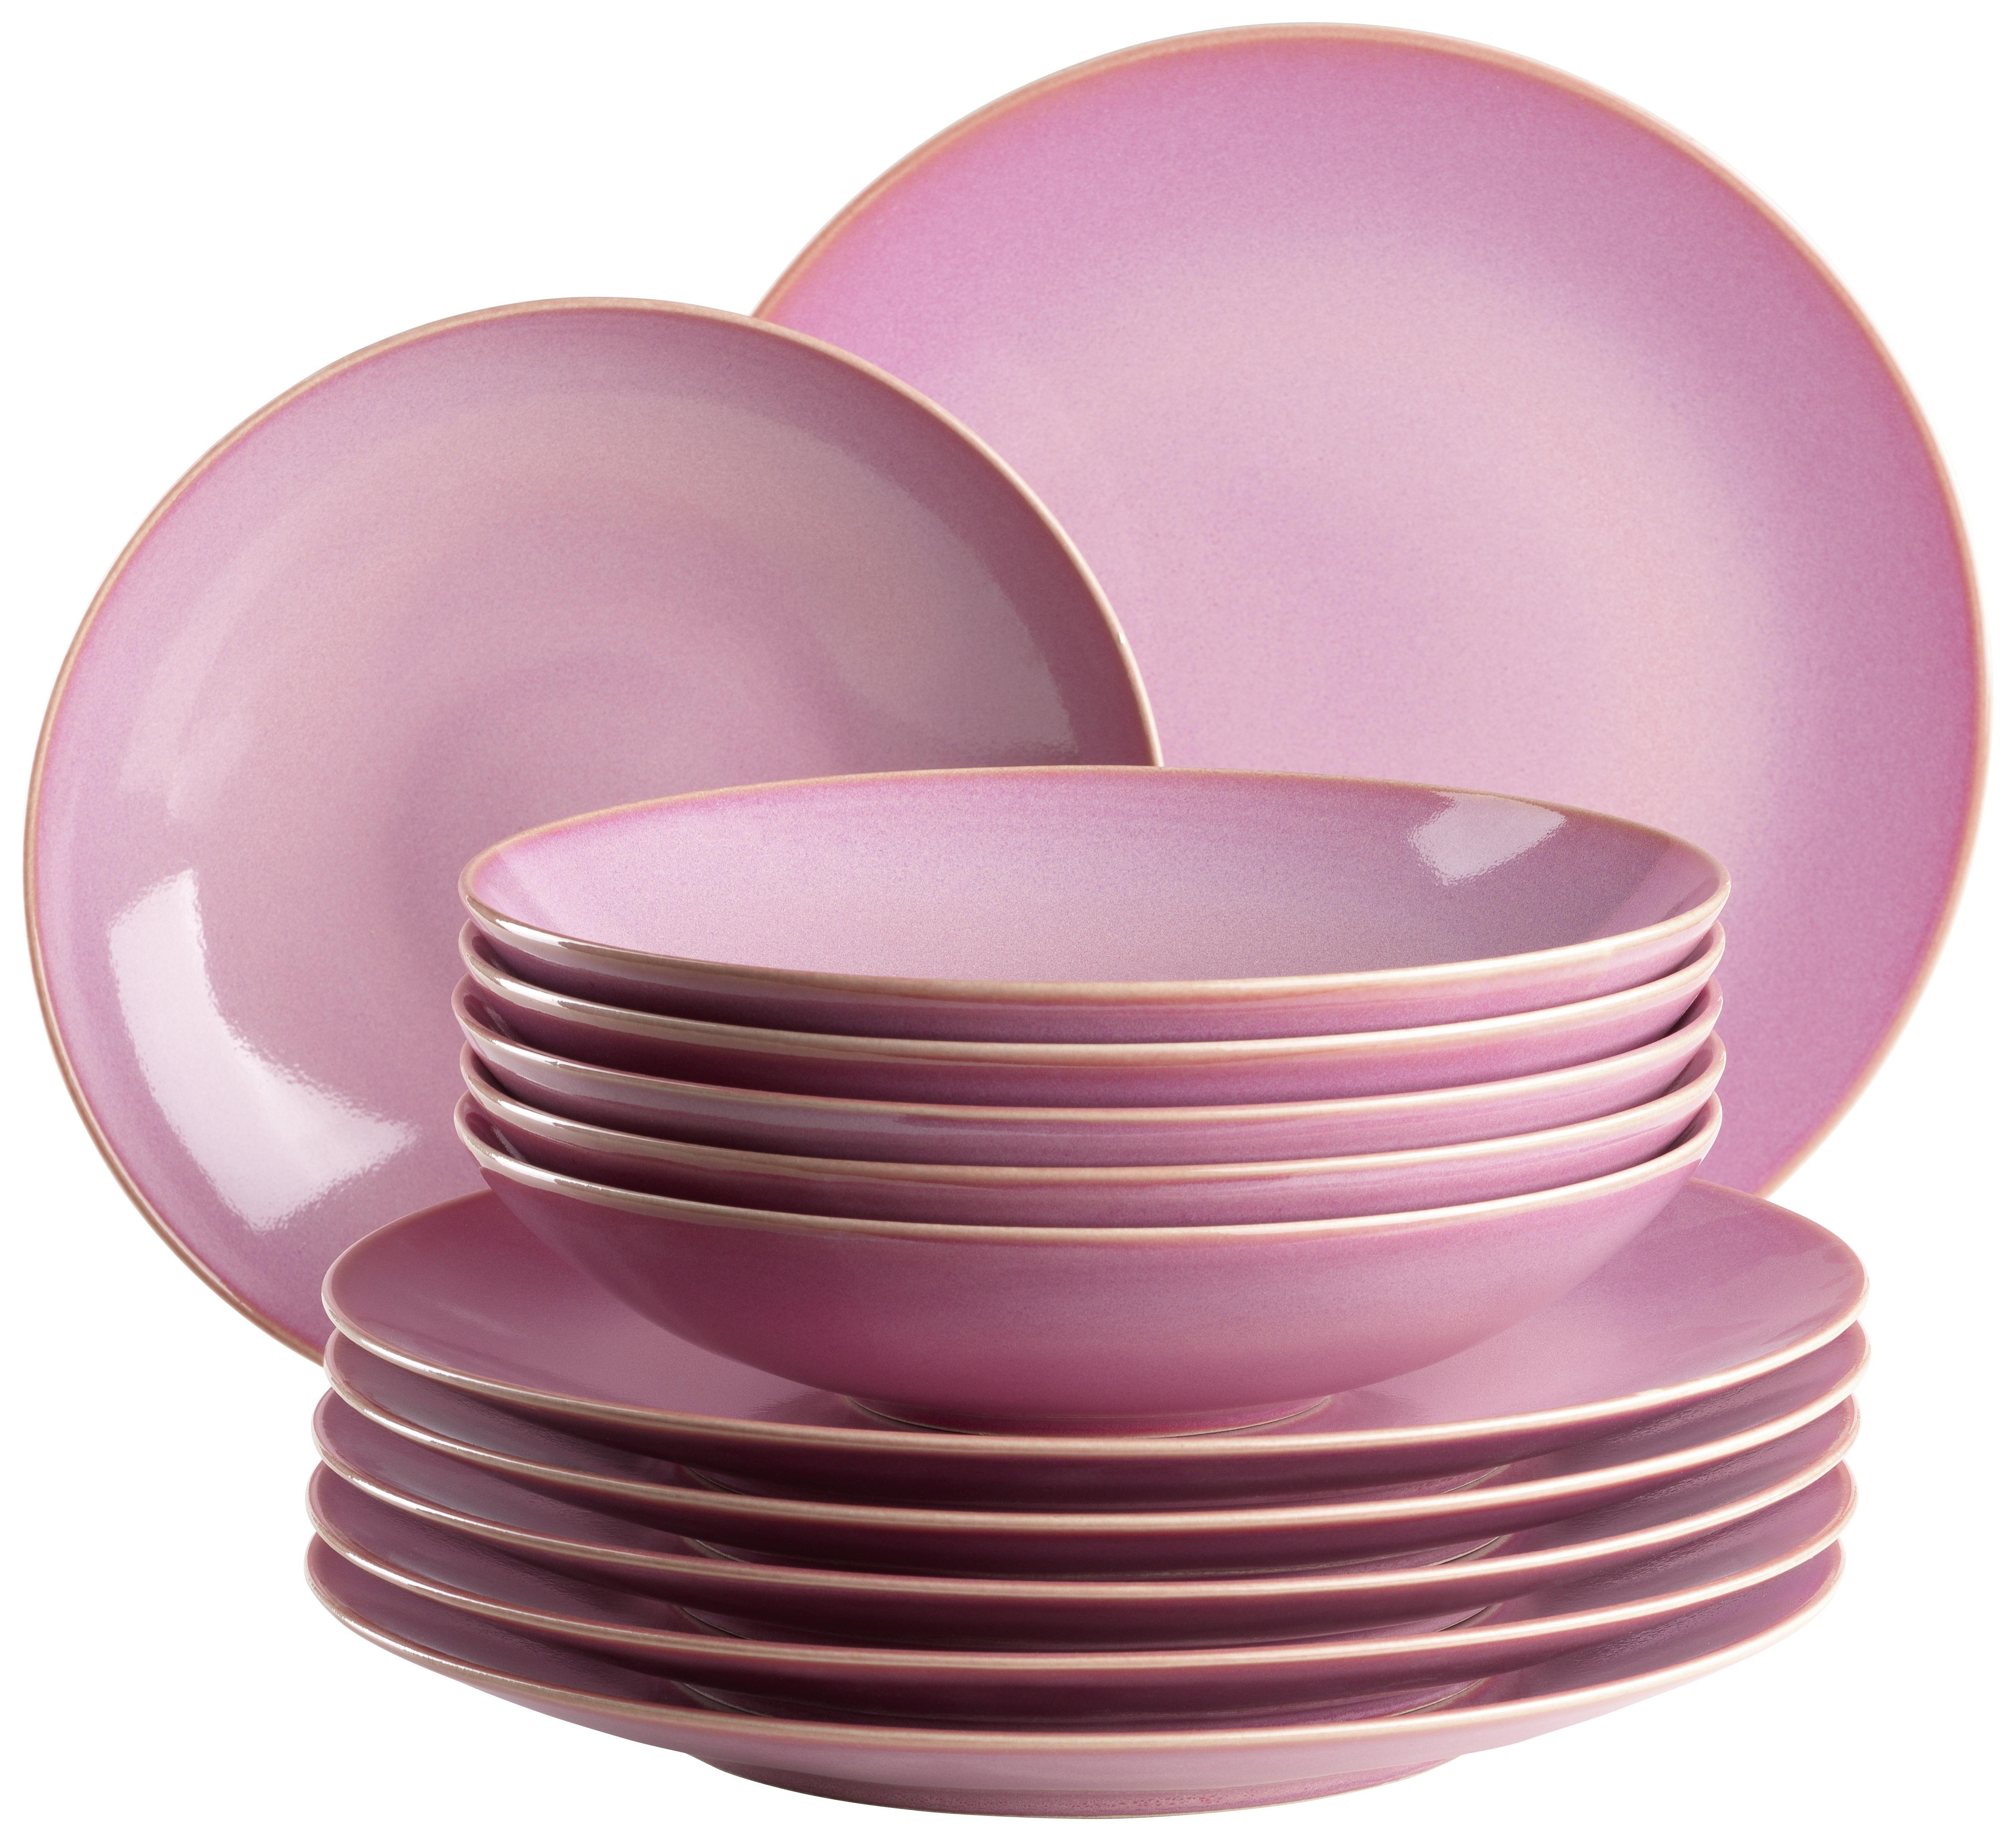 Tafelservice Ossia in Pink, 12-teilig - Pink, Basics, Keramik - Mäser